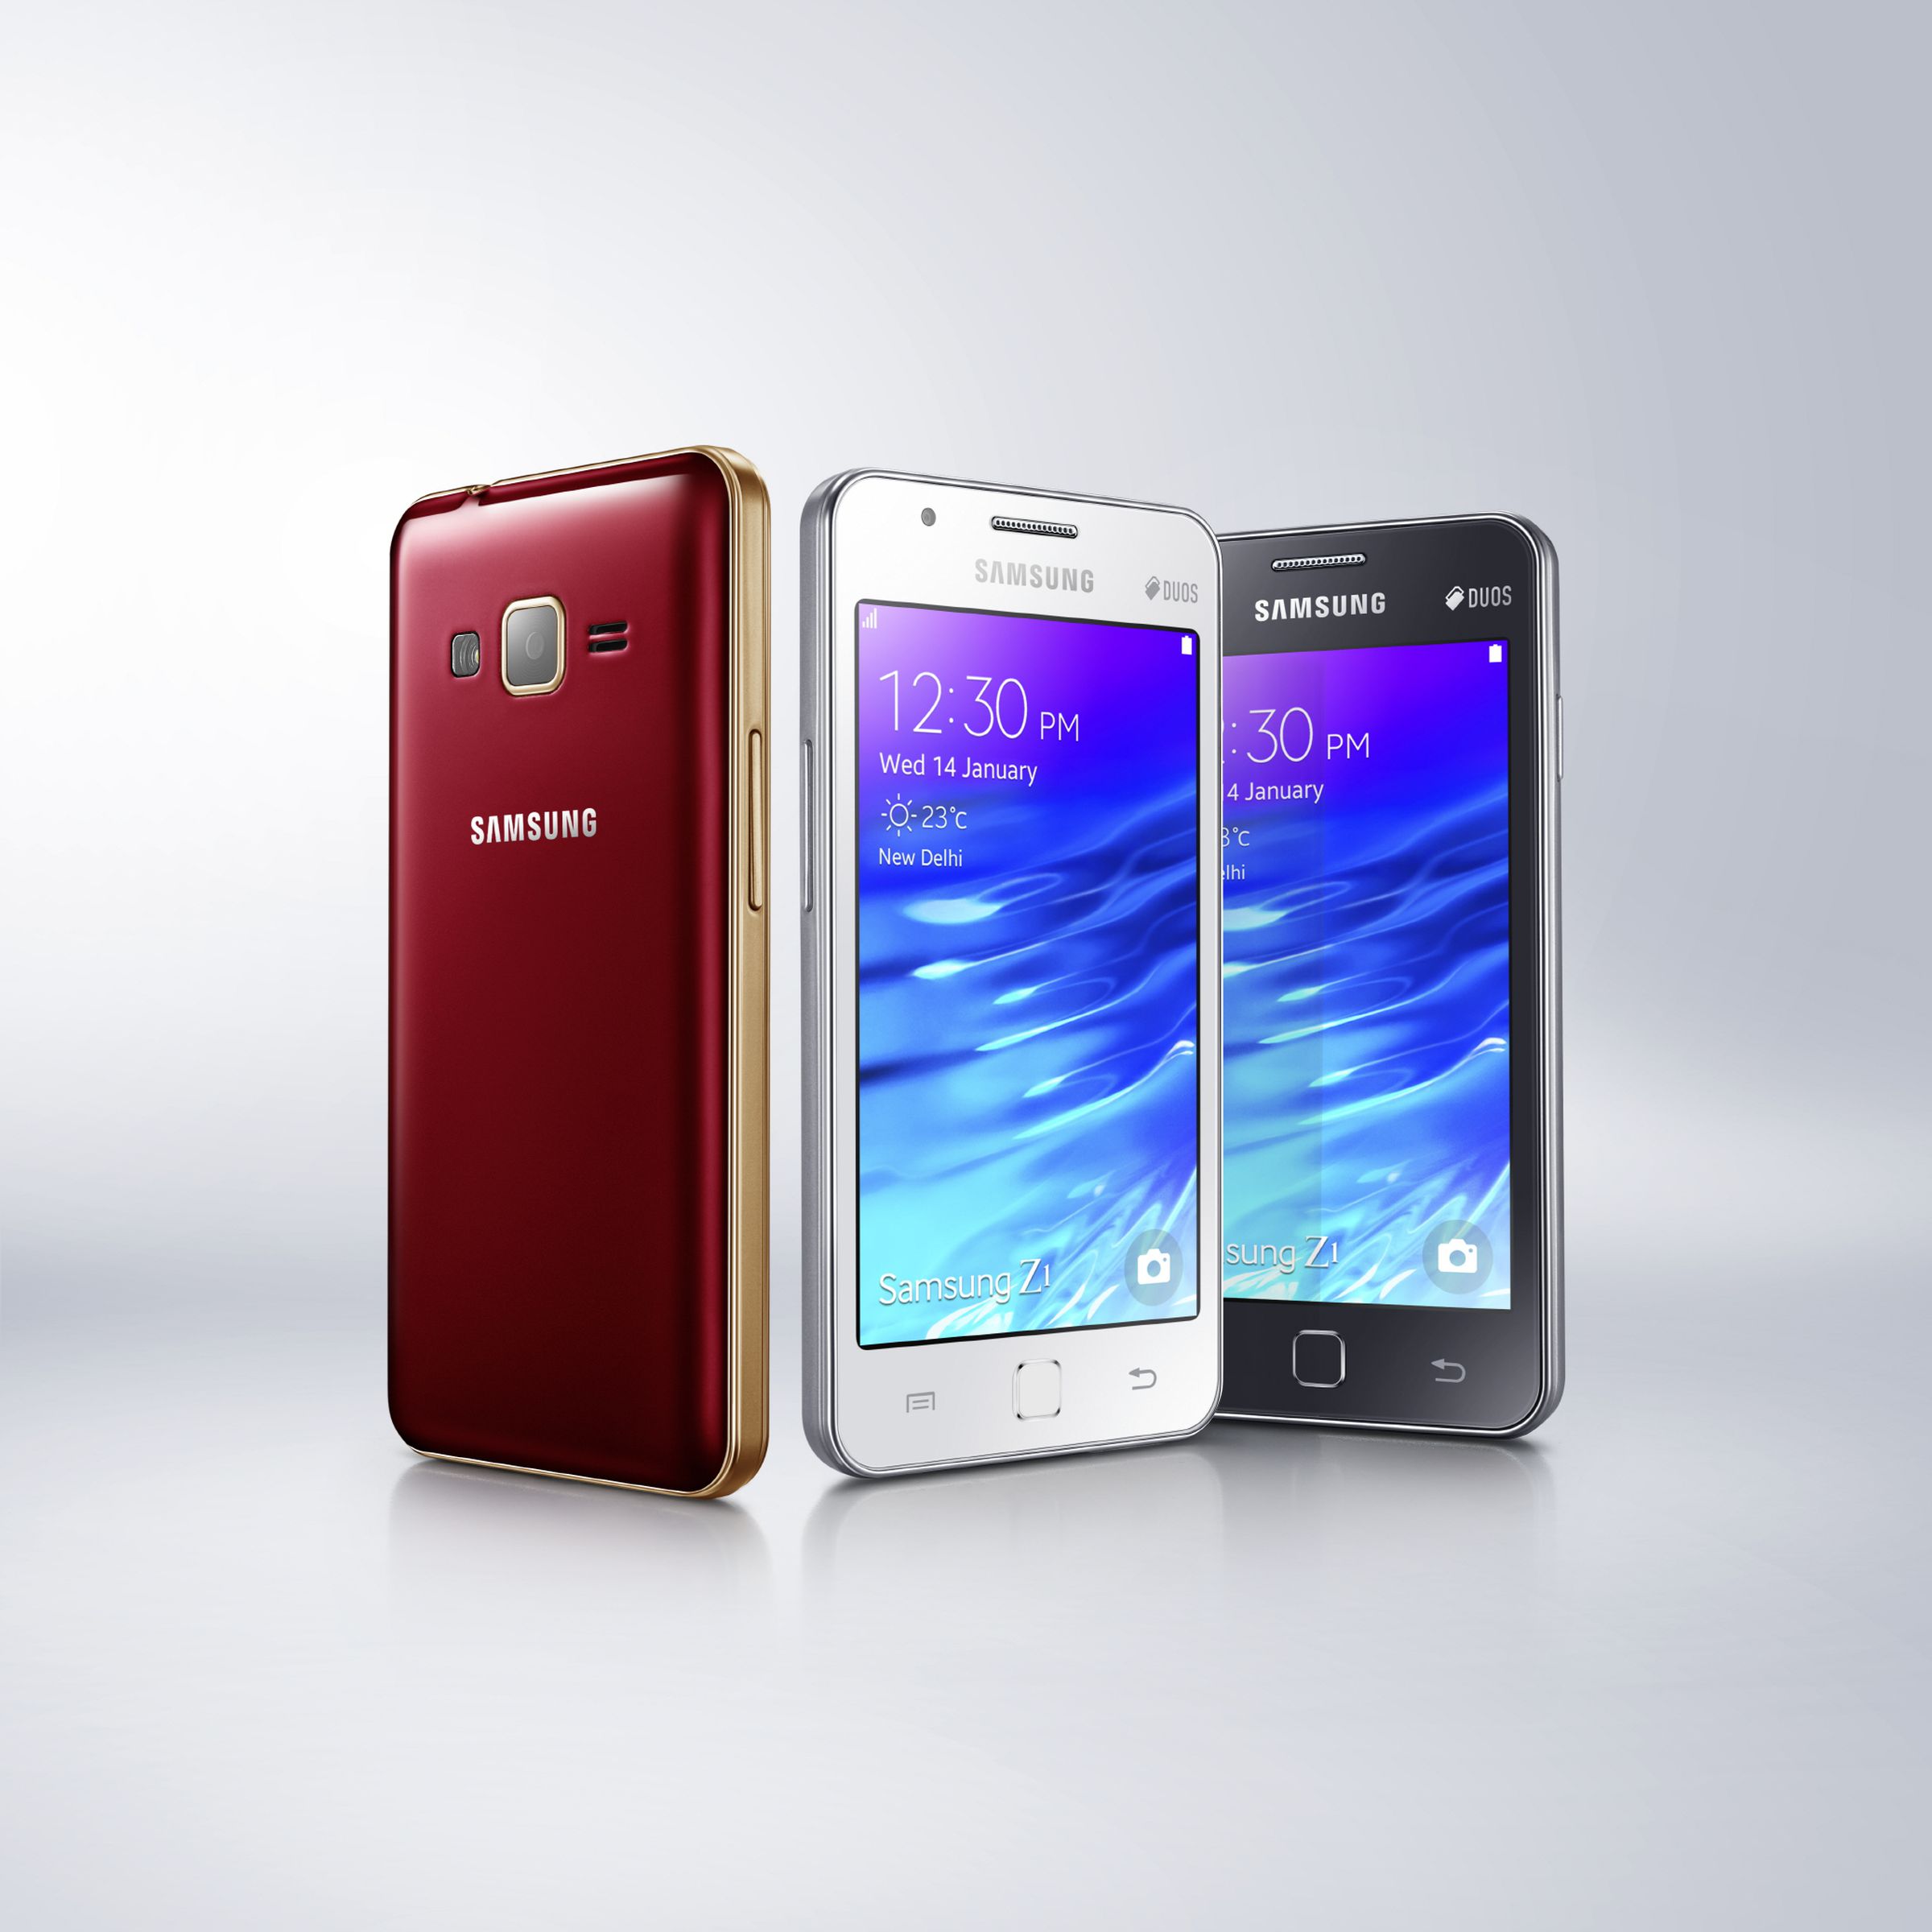 Samsung Z1 Tizen phone press images